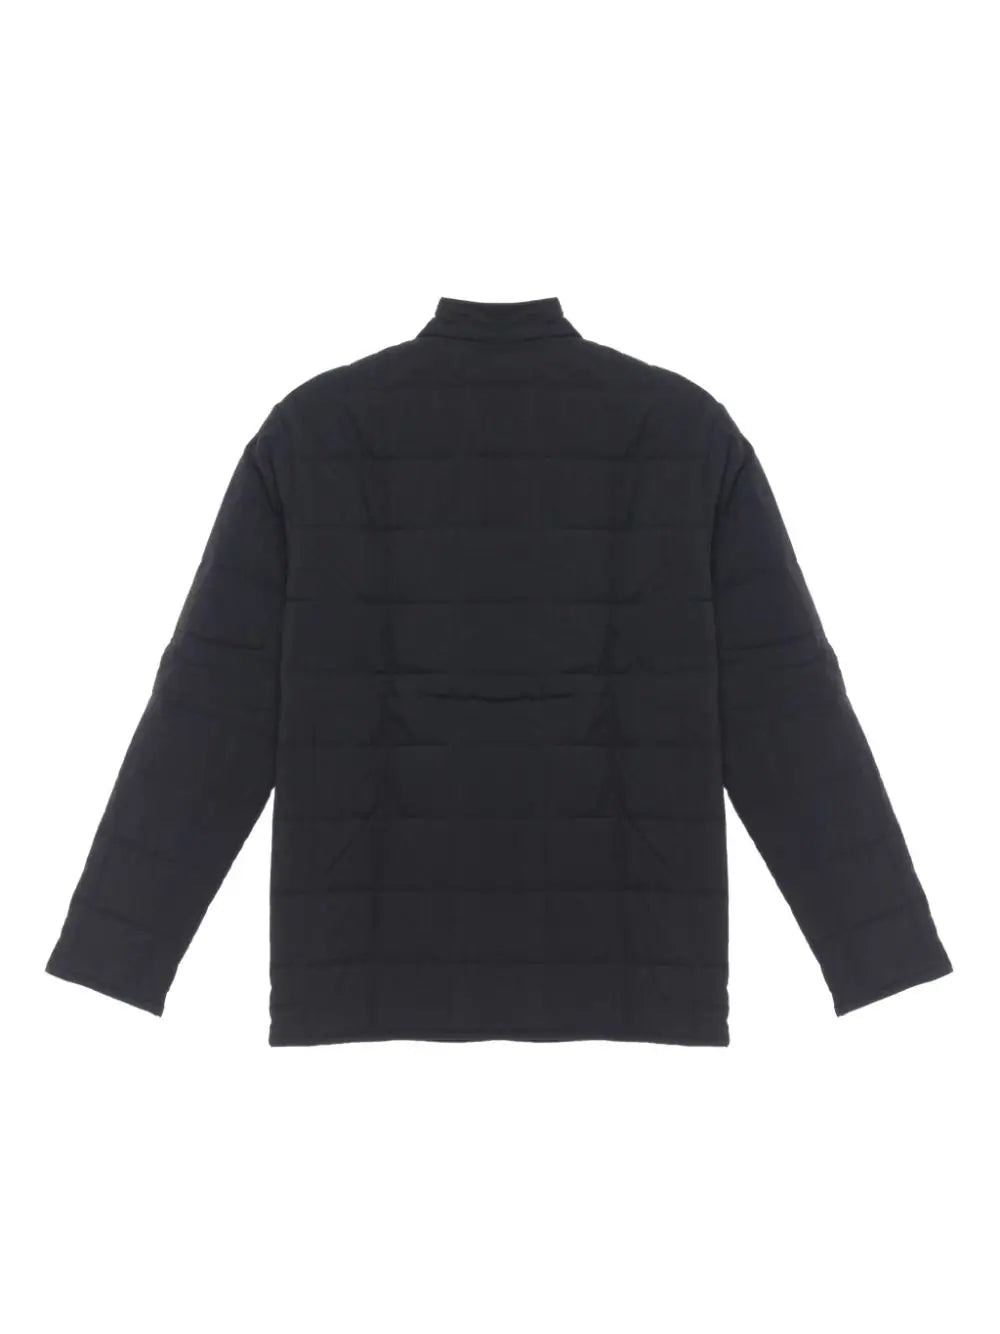 Giron Liner Jacket in Black